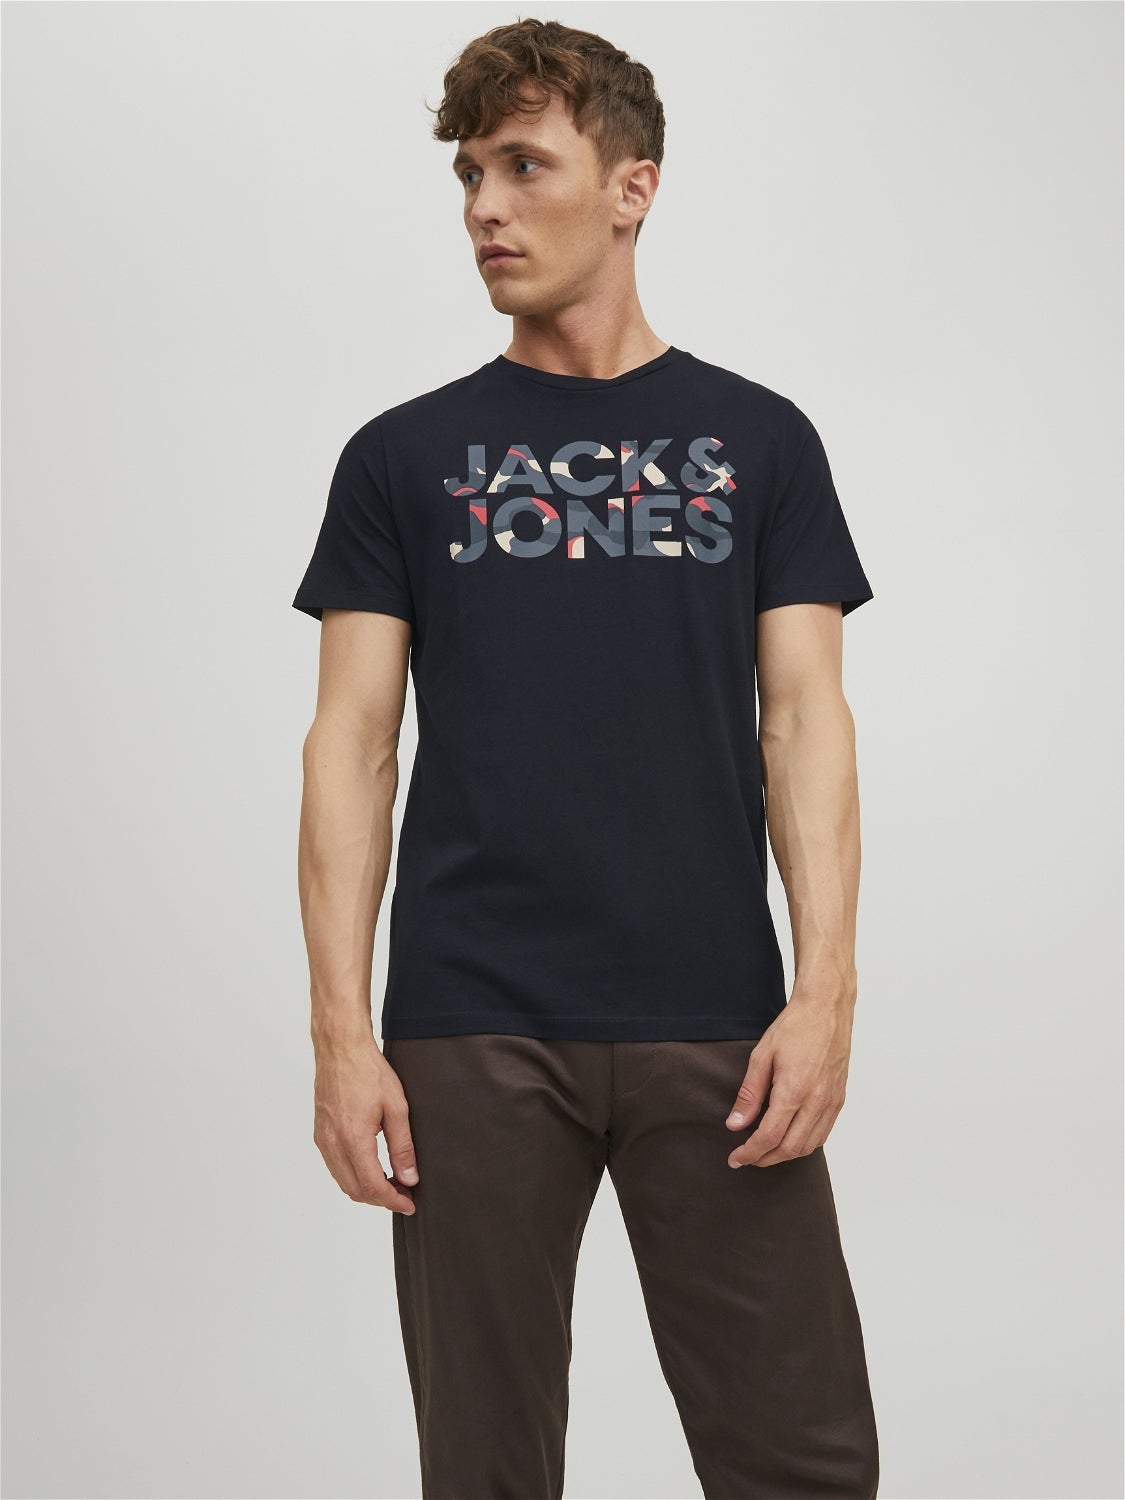 Herren Kleidung Tops & T-Shirts T-Shirts Einfarbige T-Shirts Jack & Jones Einfarbige T-Shirts graues Jack & Jones T-Shirt 